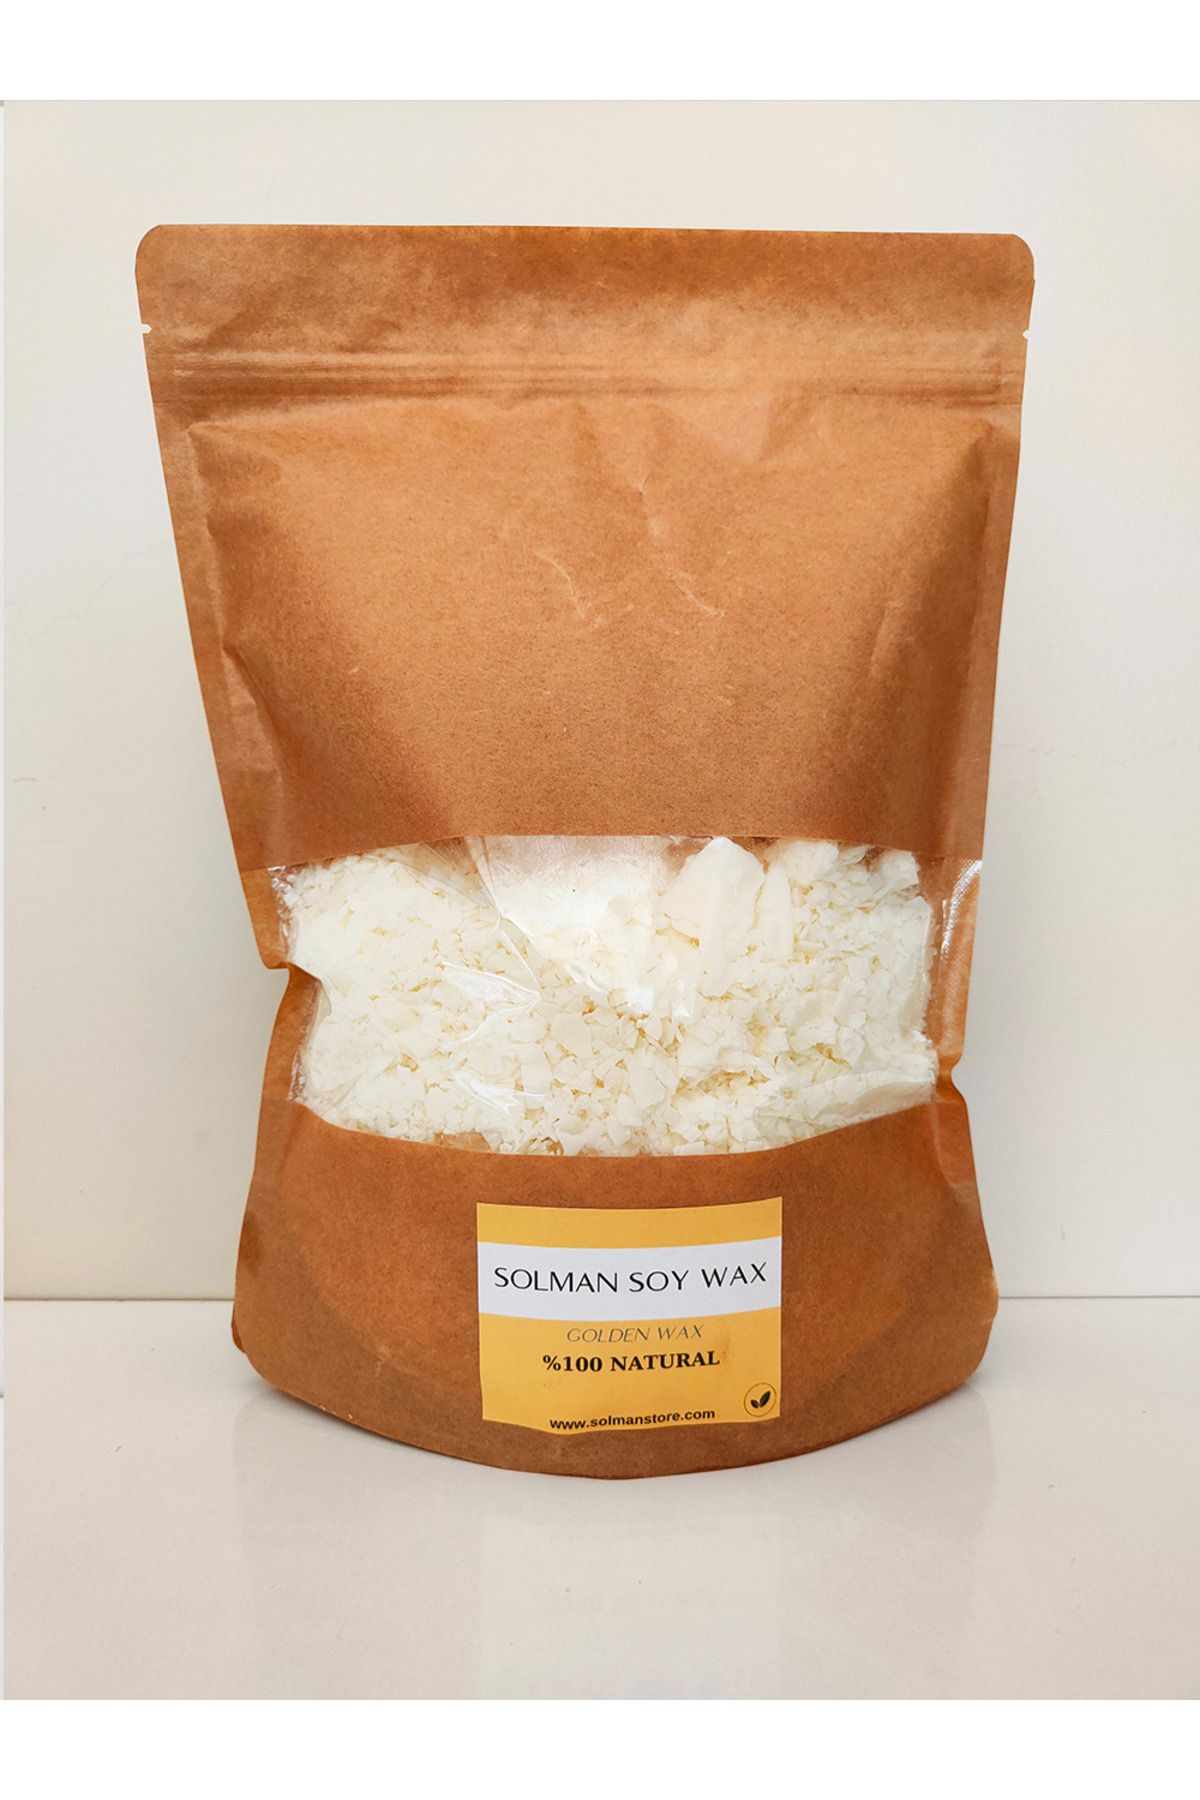 Solman %100 Natural Soy Wax Pul Şeklinde Flake Vegan Organik Soya wax Doğal Kokulu Mum Yapma Malzemesi 1 KG